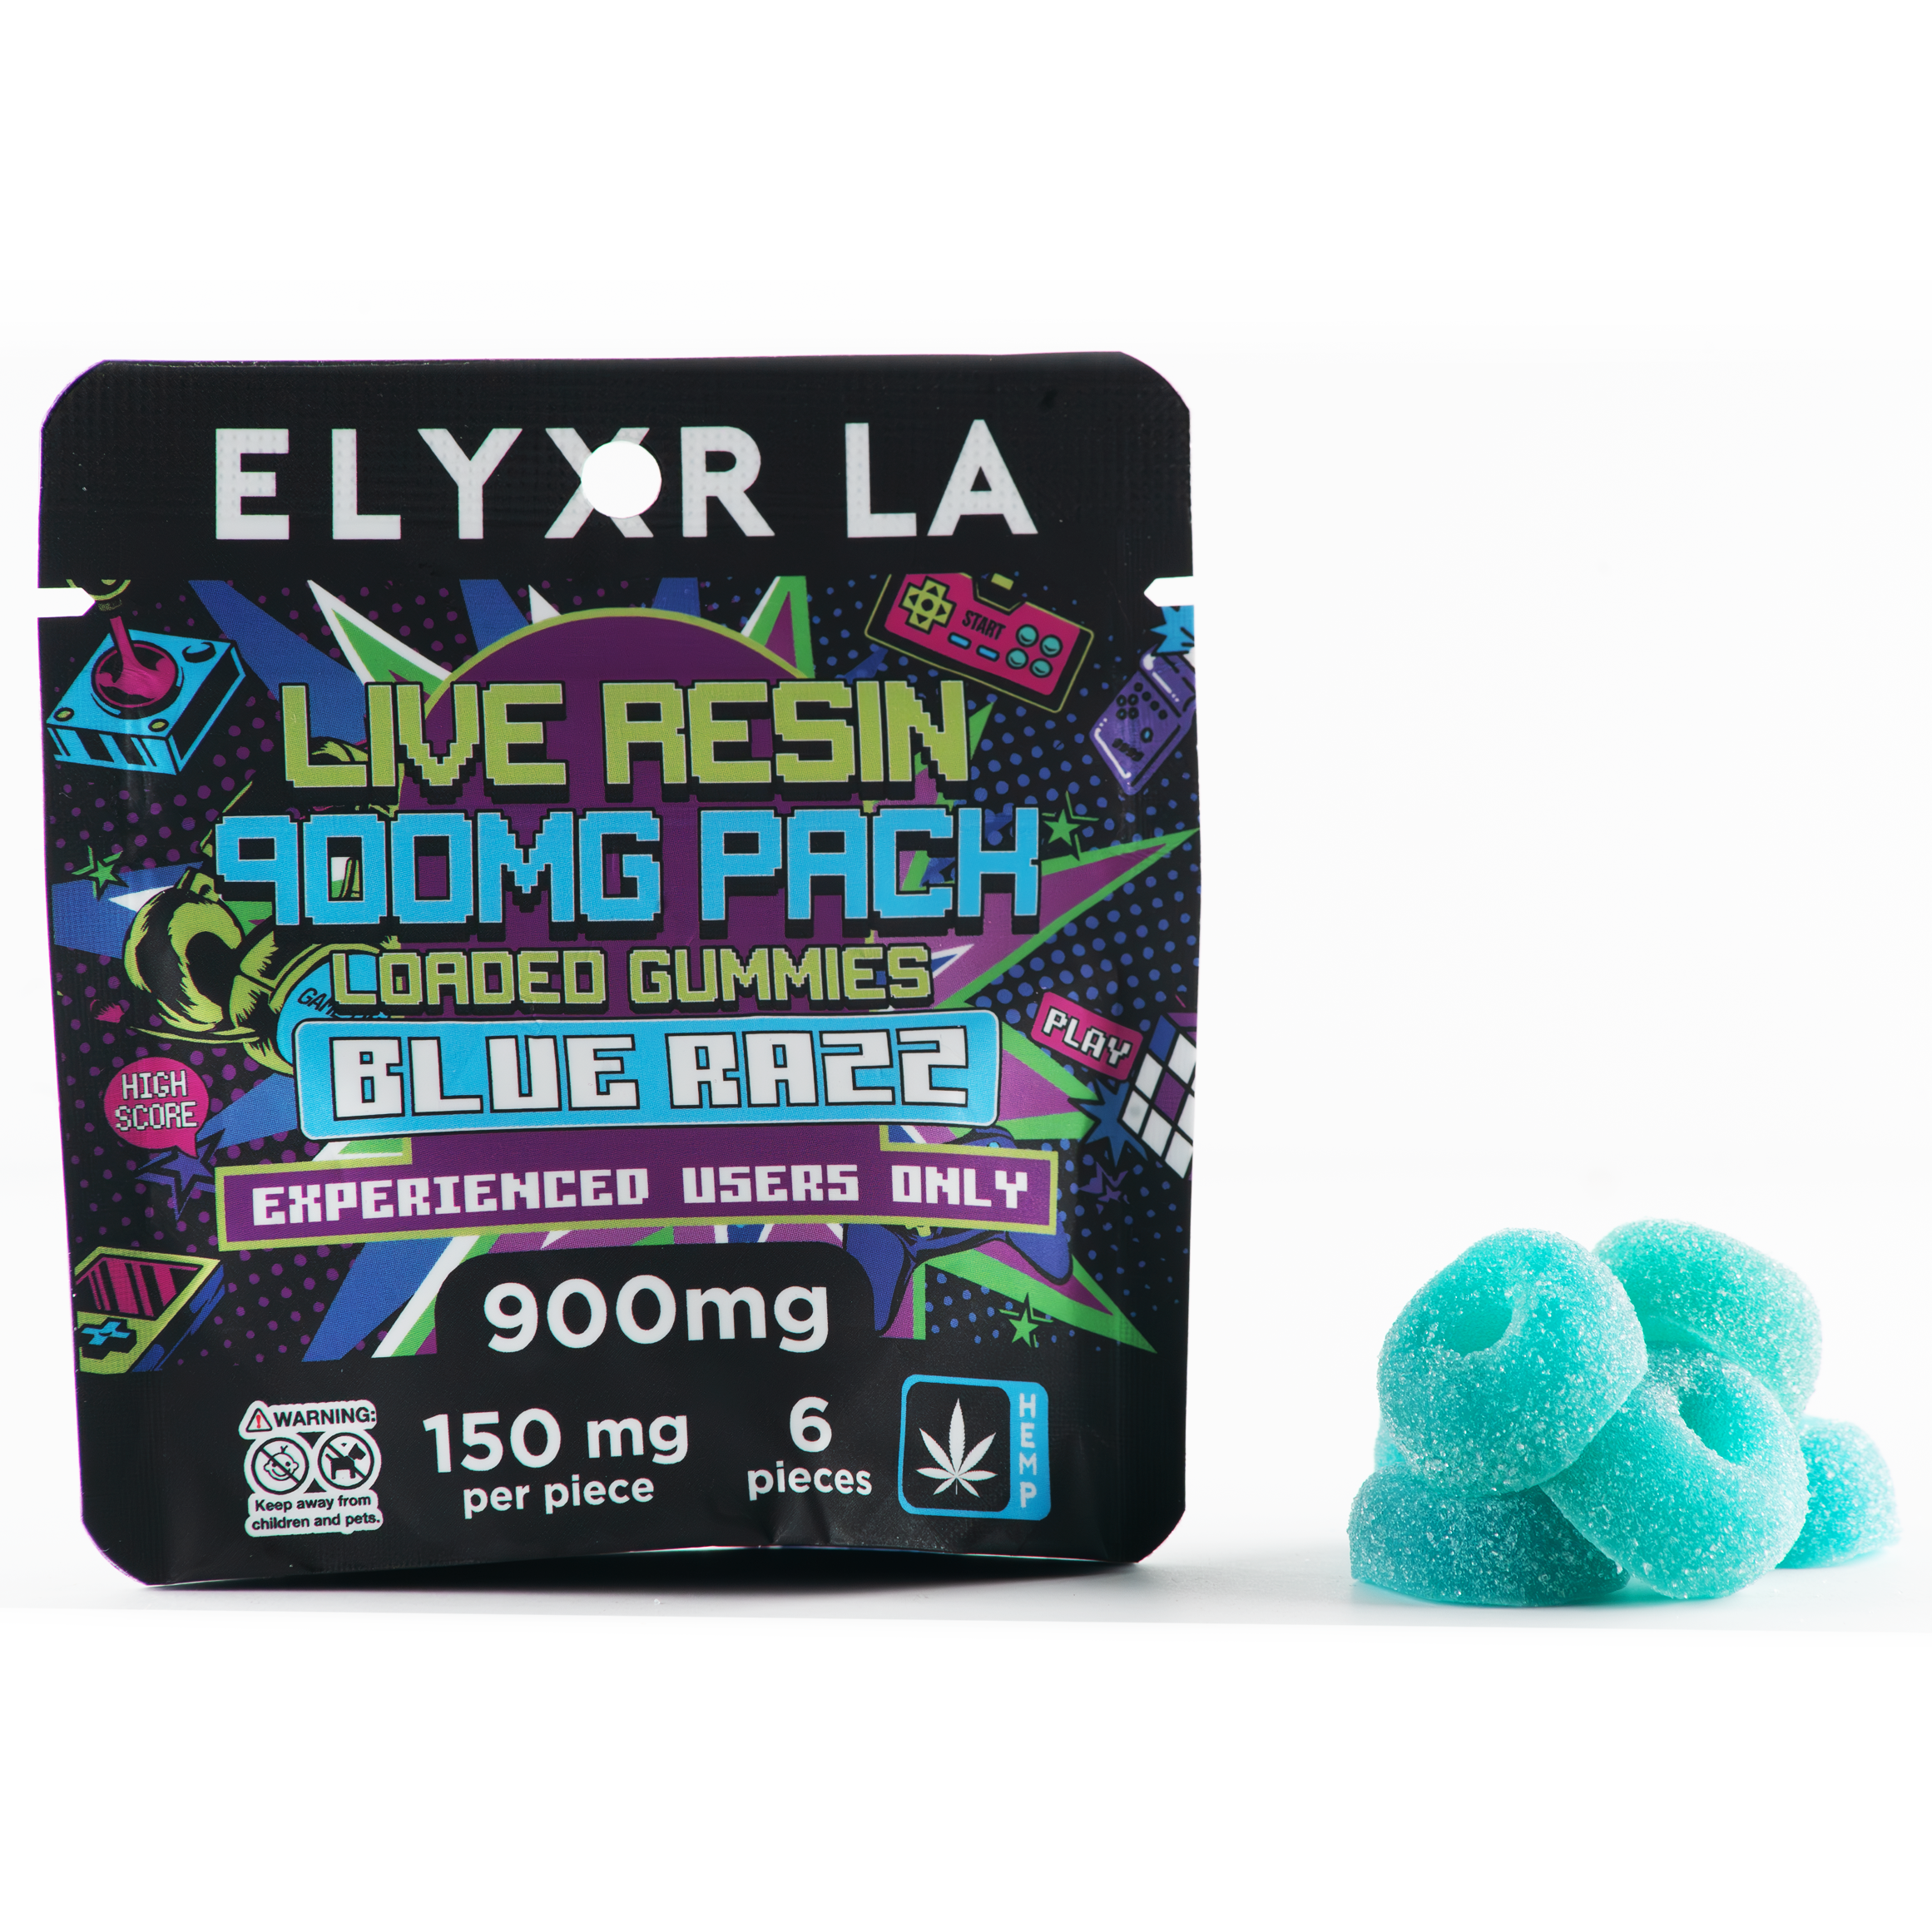 Live Resin Loaded Gummies (900mg) 6 Pack